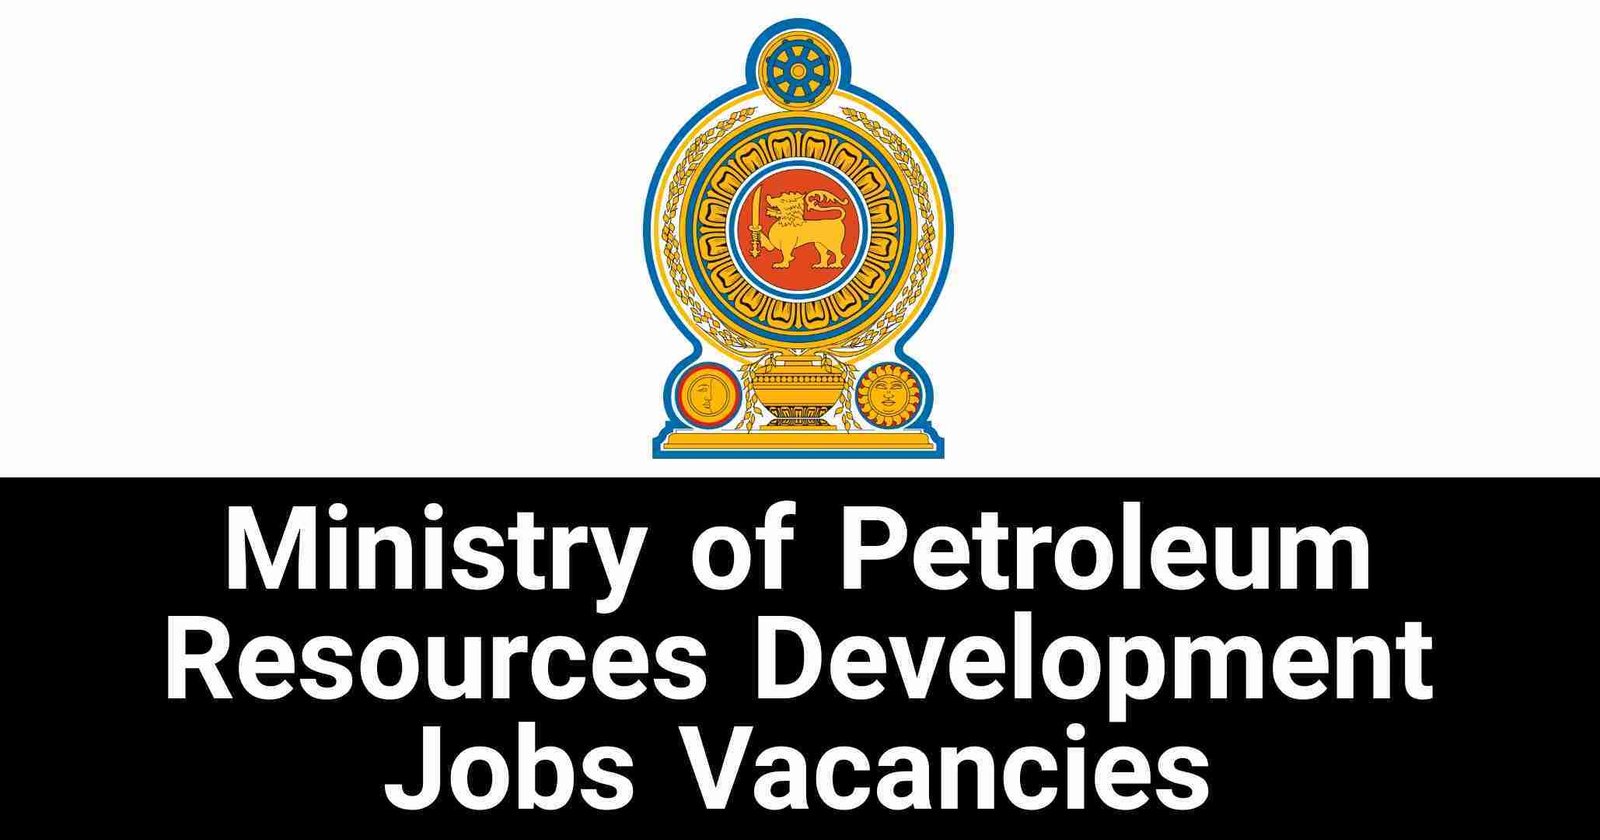 Ministry of Petroleum Resources Development Jobs Vacancies